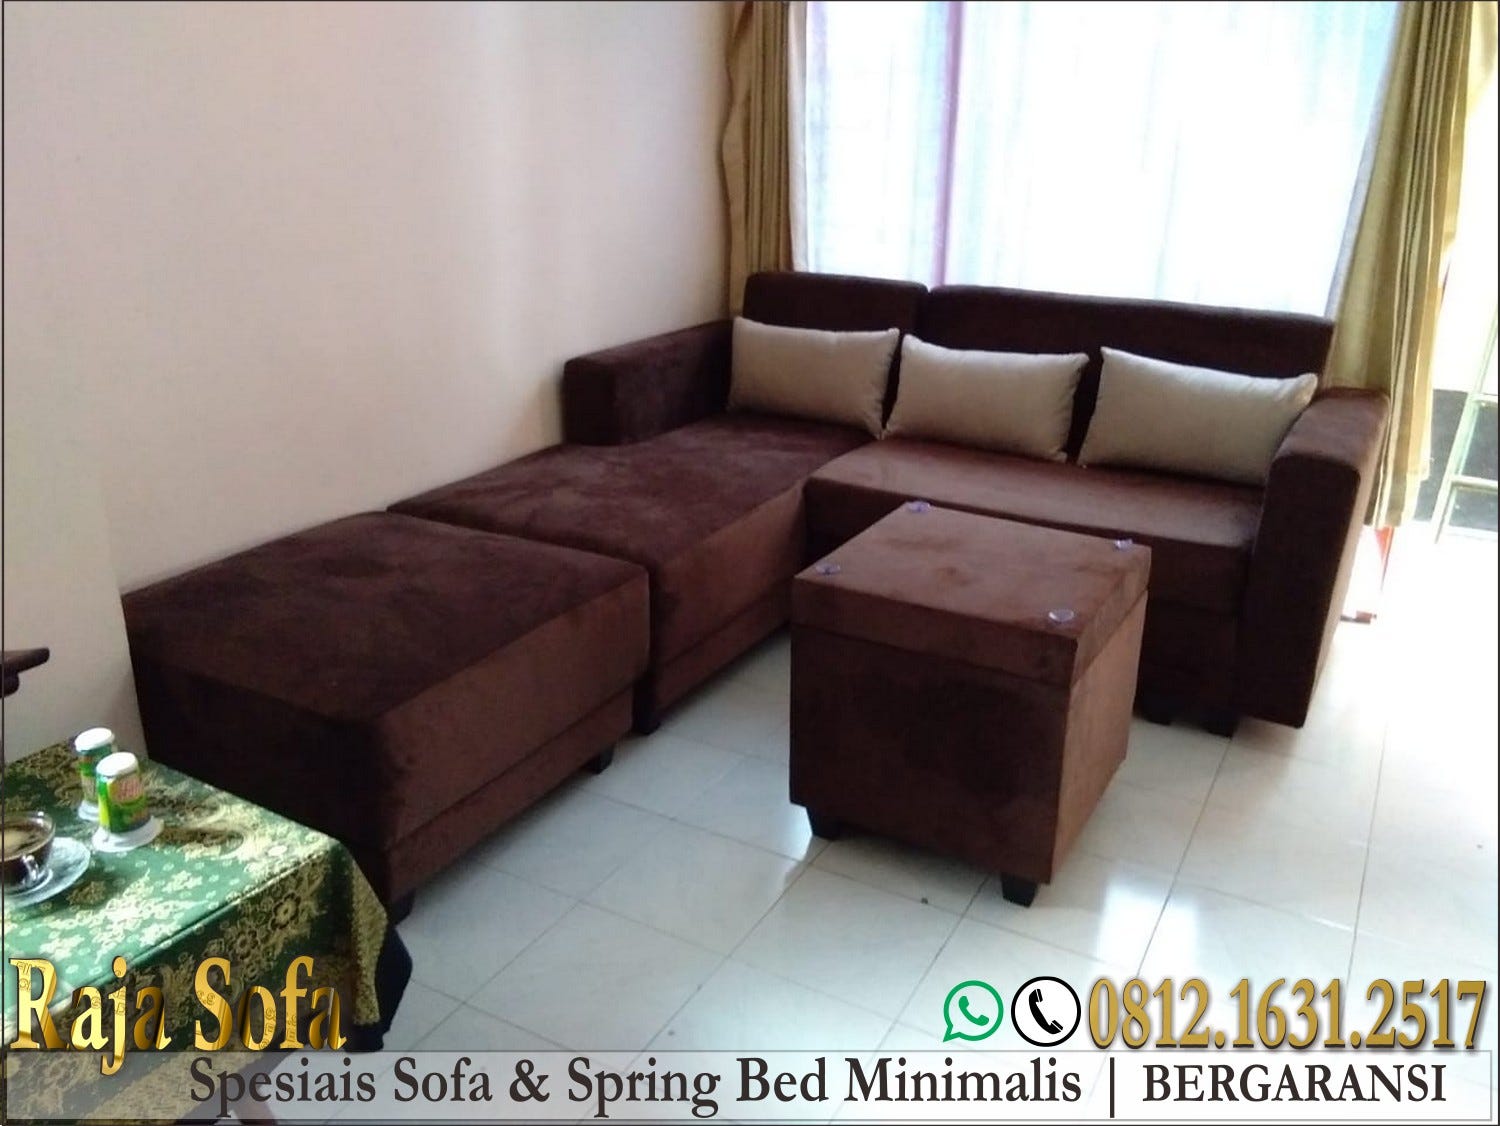  Sofa  Minimalis  Jogja  Murah  Women Healthy